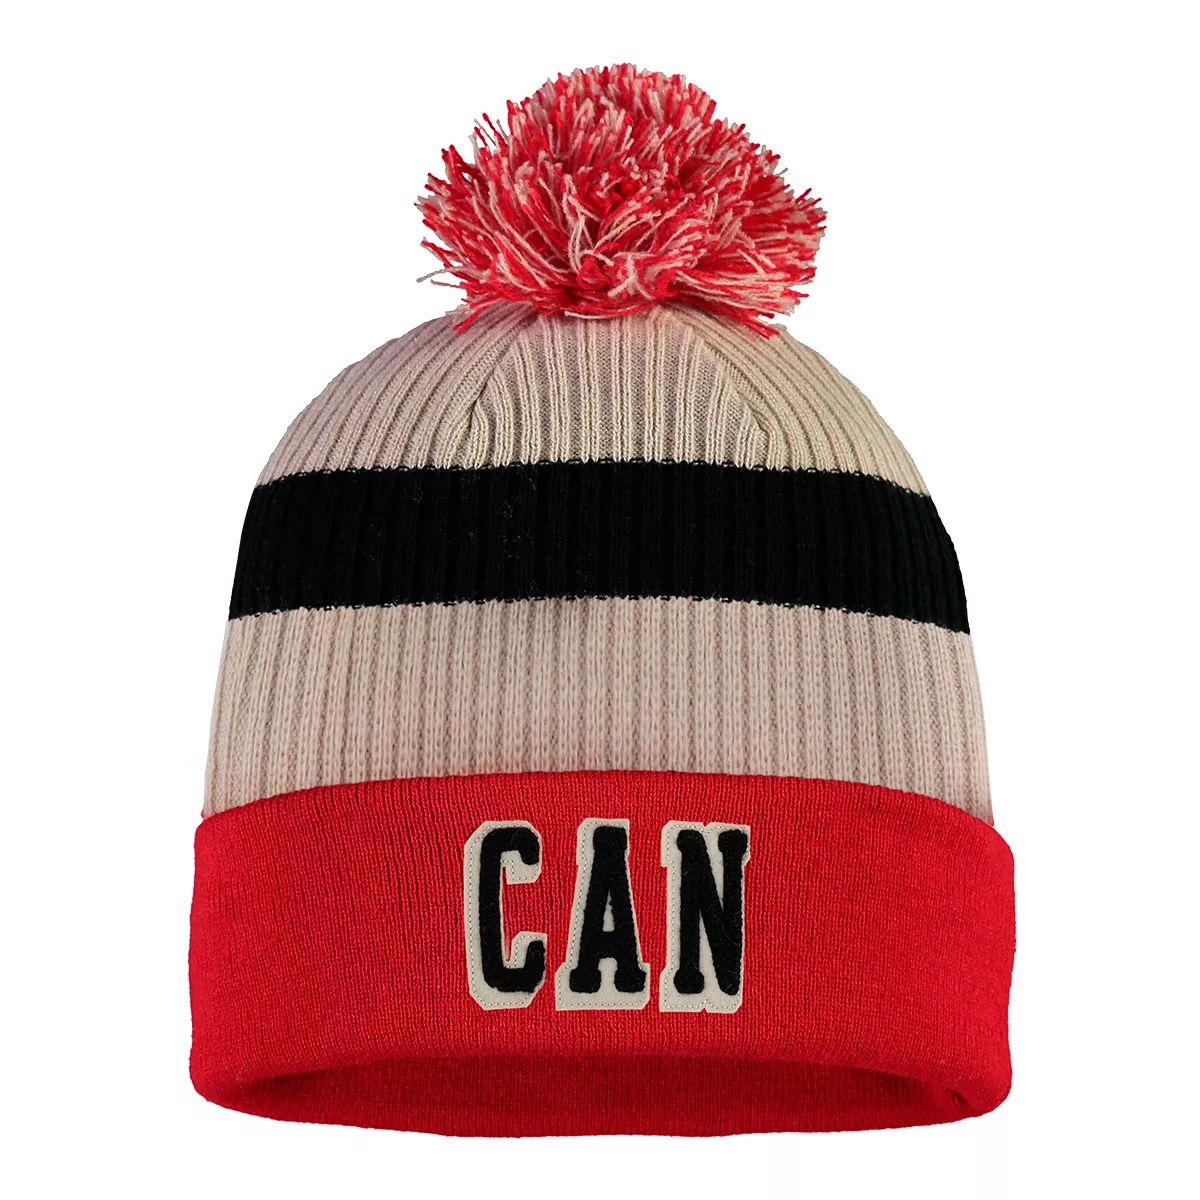 NIKE Team Canada Nike Dri-FIT Wool Adjustable Hat Iihf Hockey